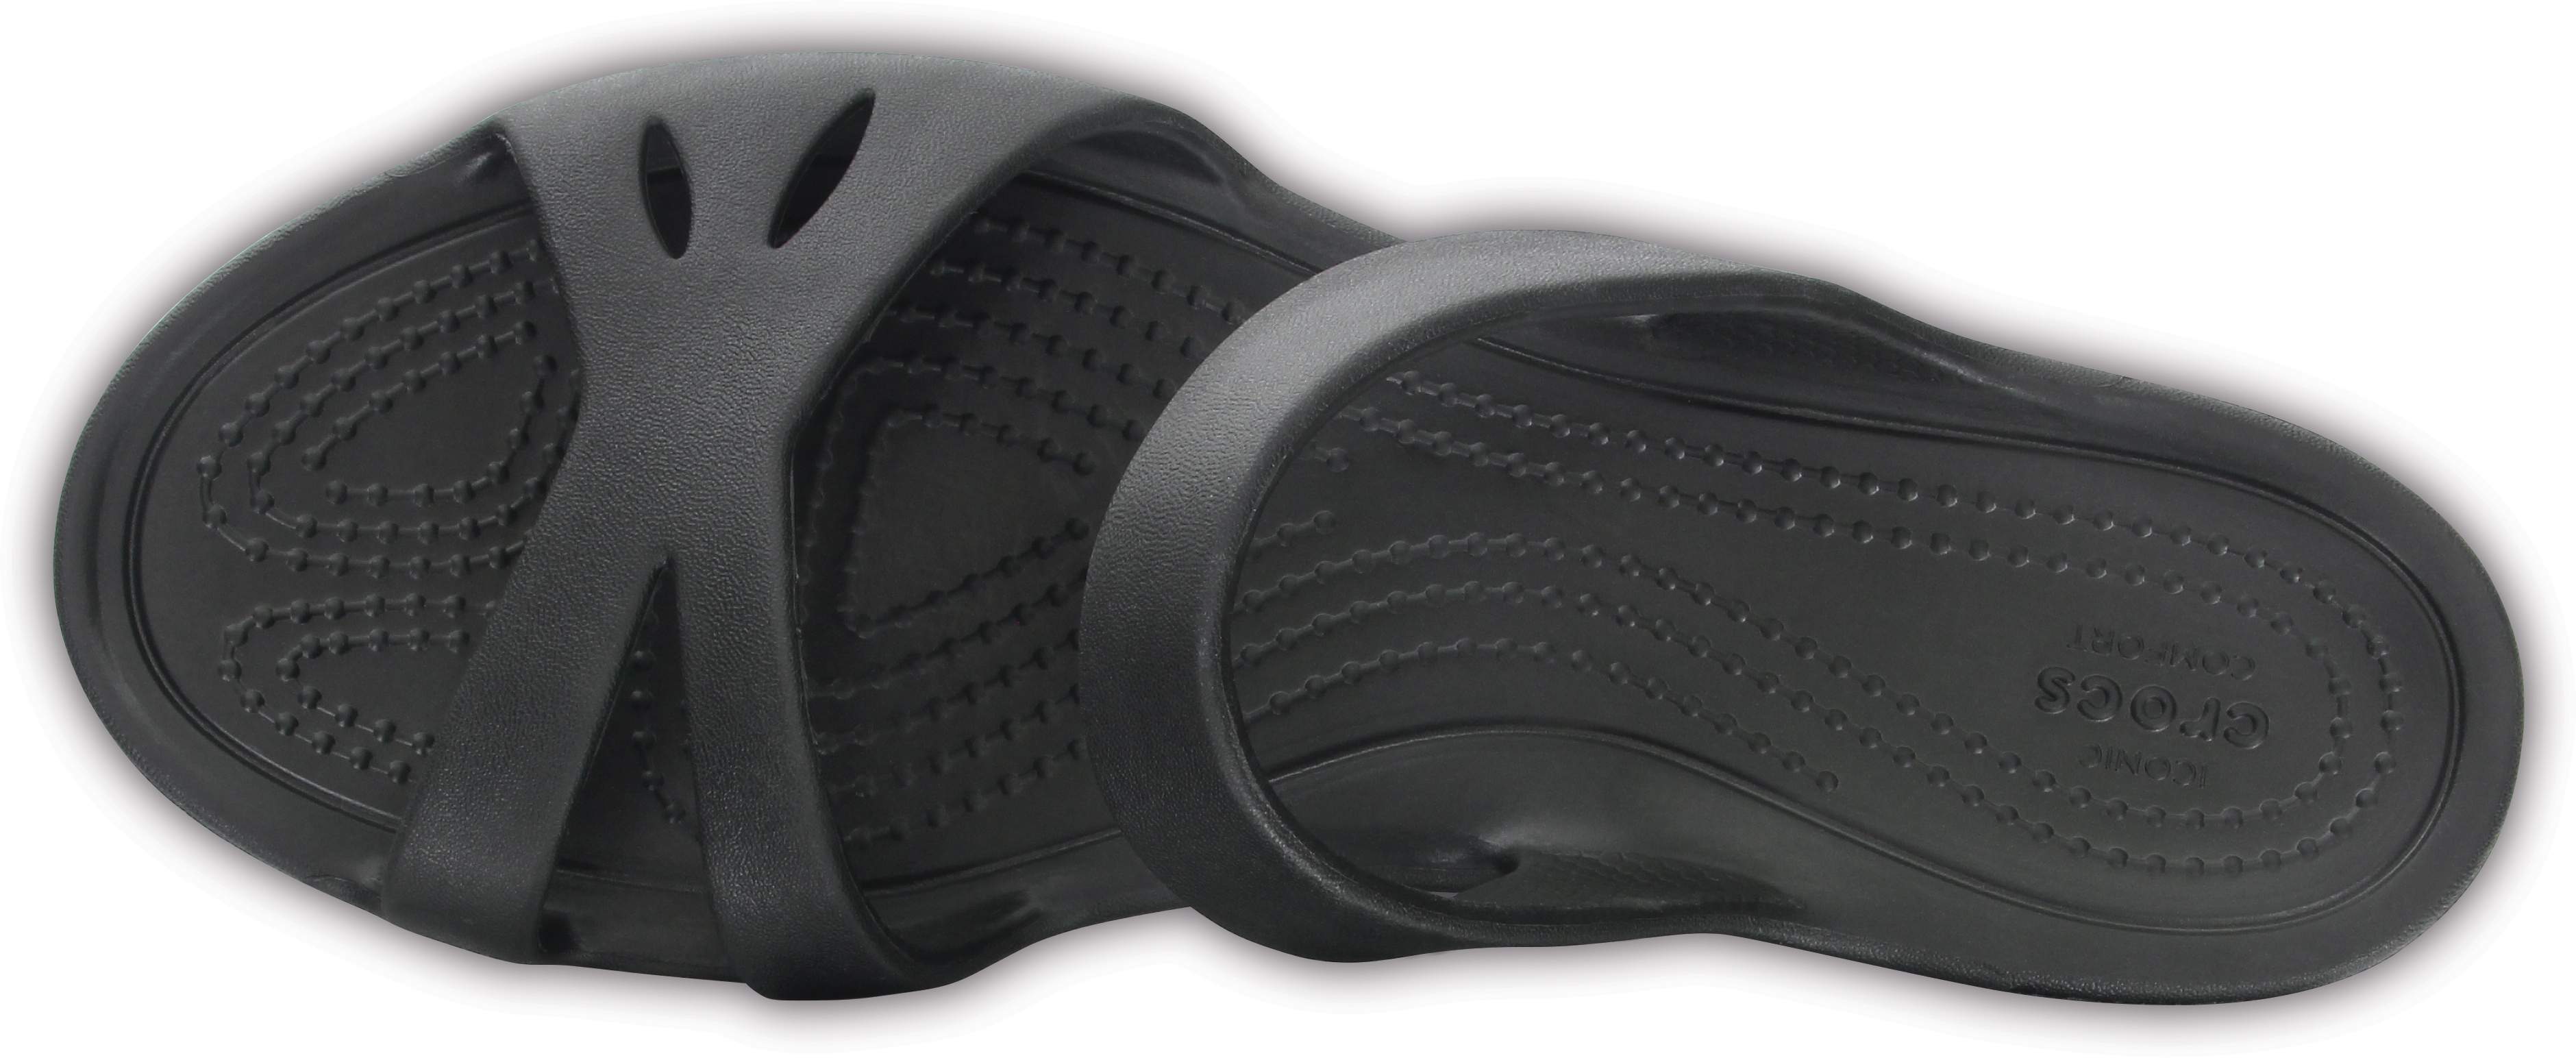 Crocs Womens Kelli Sandals | eBay